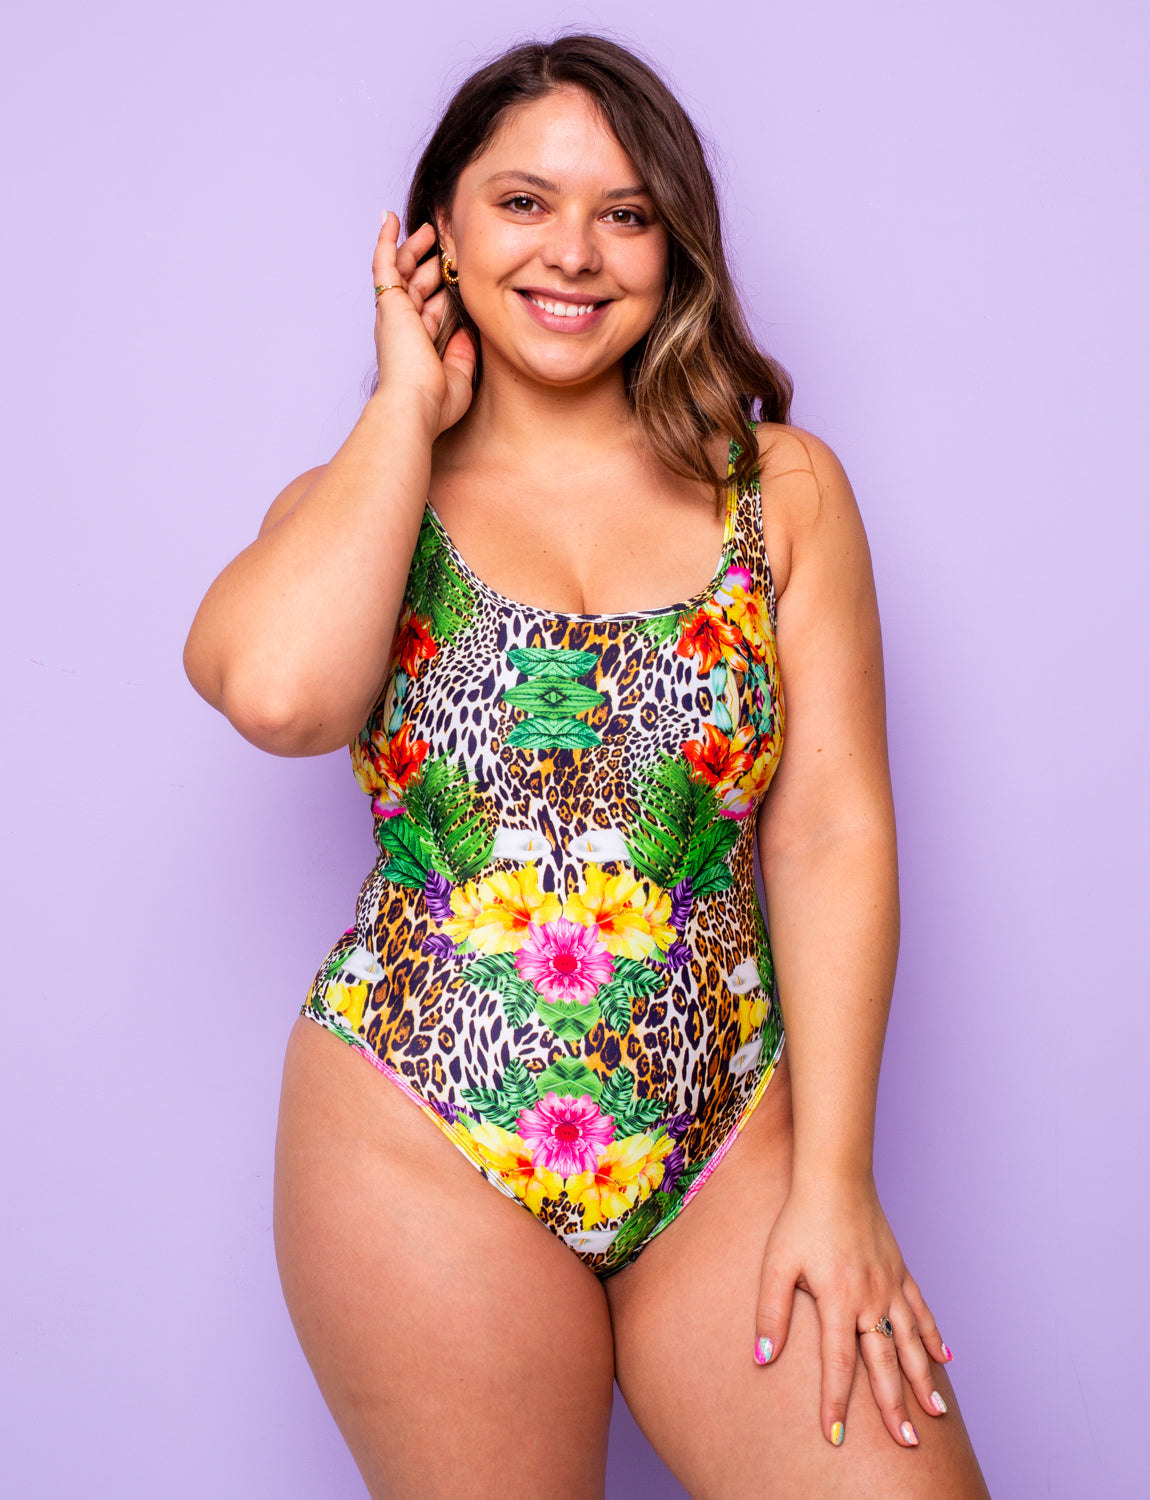 Woman modelling Jungle leopard print Lycra Fabric swimsuit